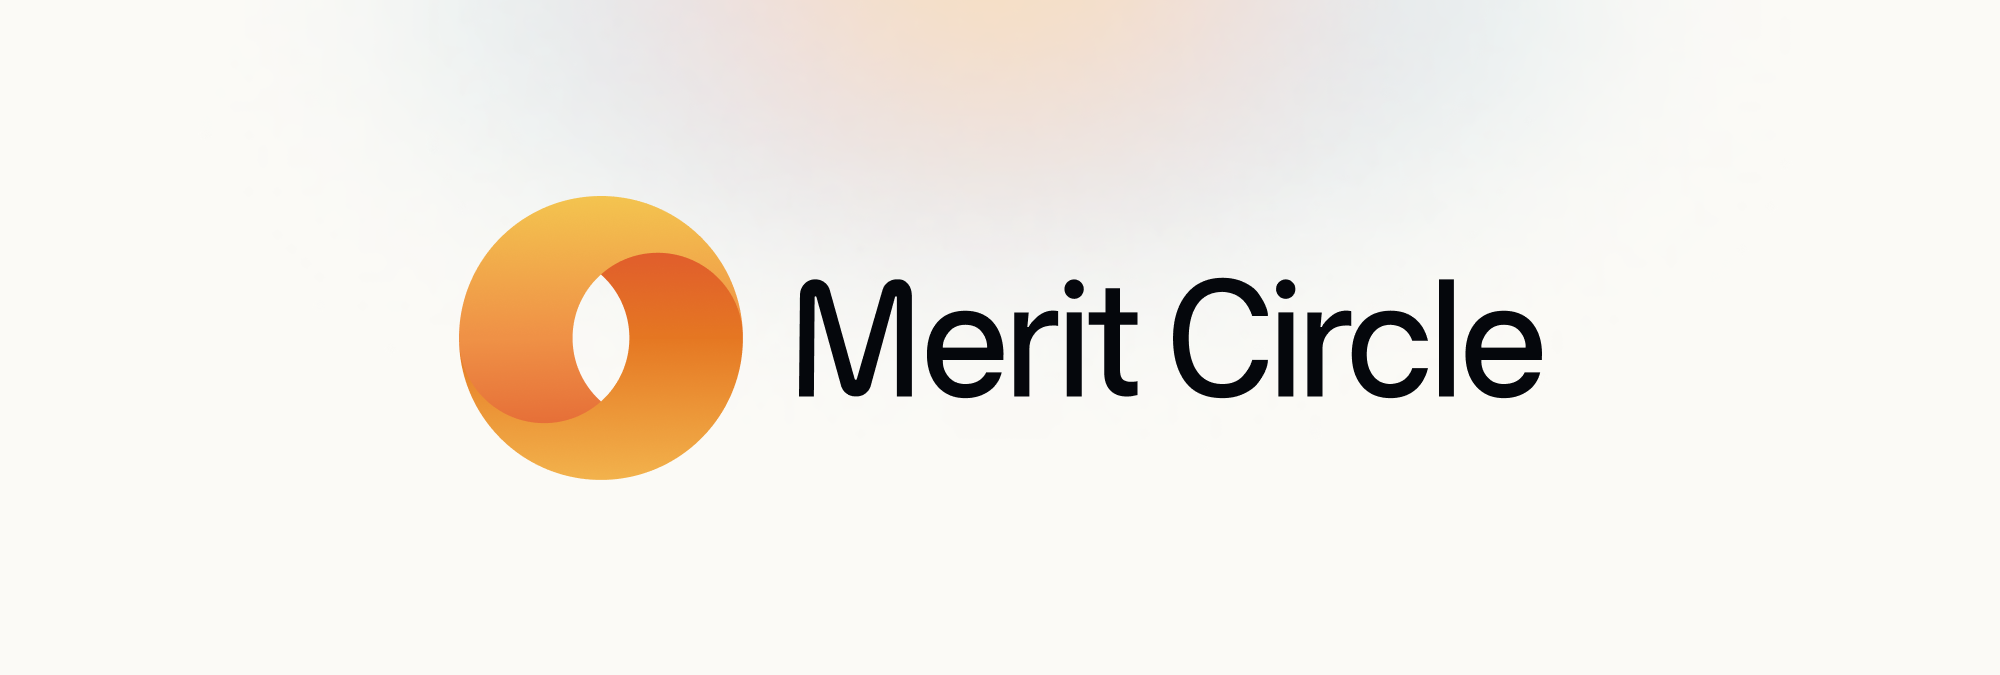 MERITCIRCLE Logo